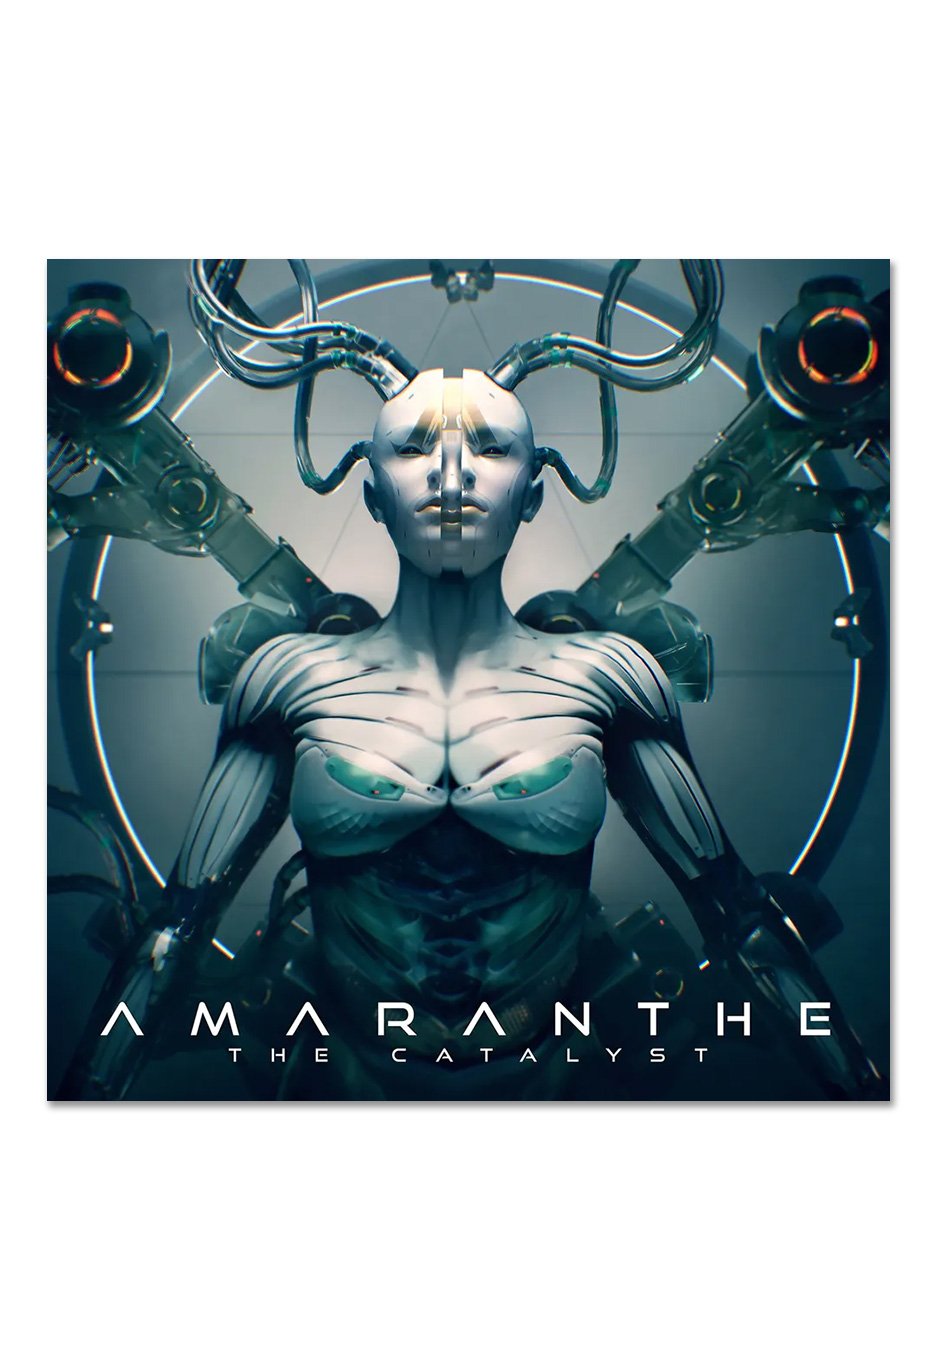 Amaranthe - The Catalyst Ltd. Green - Colored Vinyl